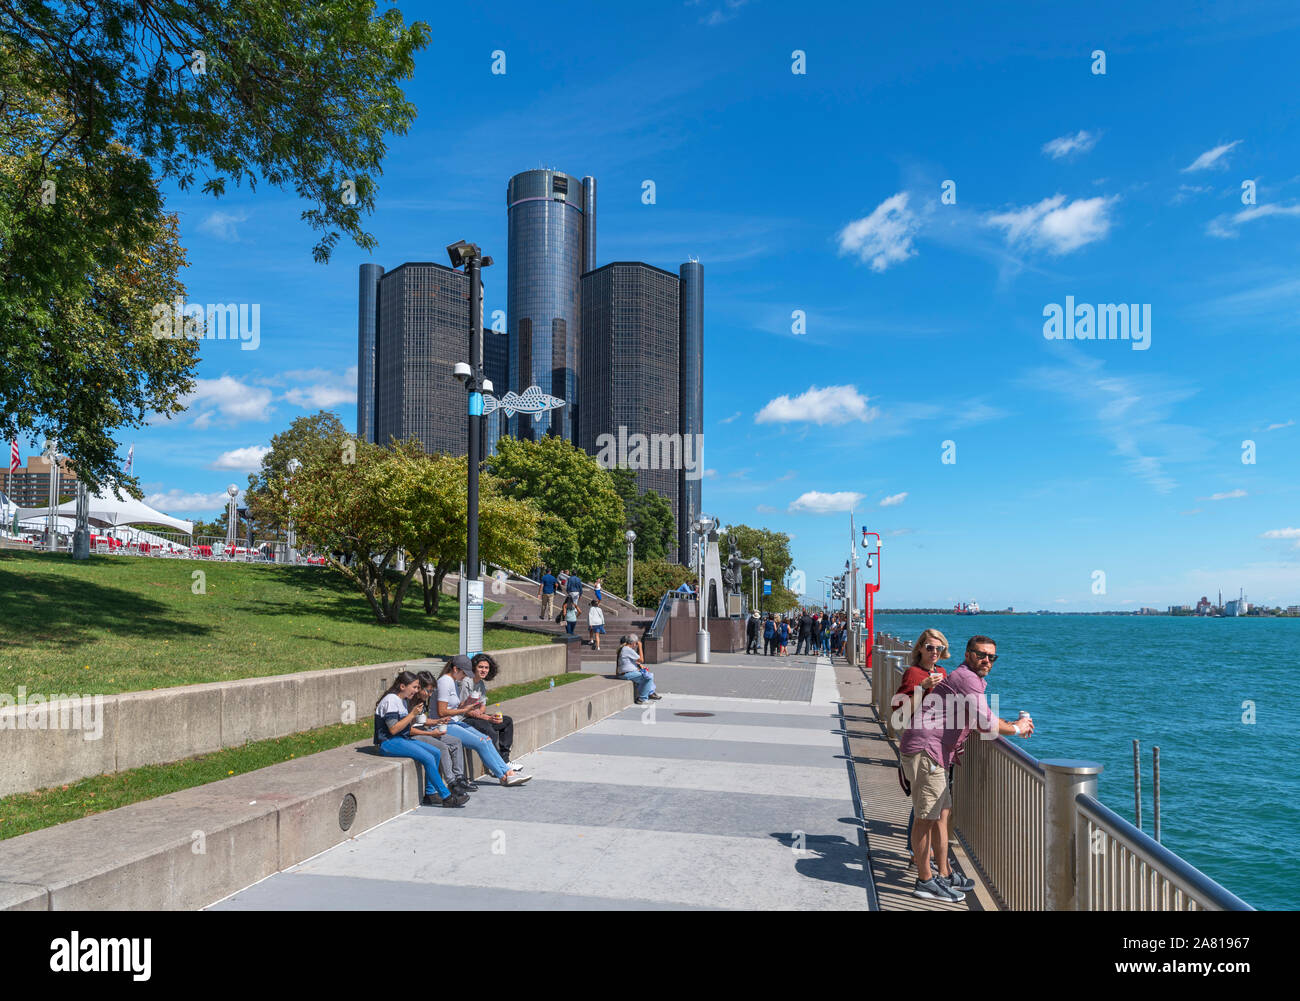 The skyline of the Renaissance Center viewed from Detroit Riverwalk, downtown Detroit, Michigan, USA Stock Photo